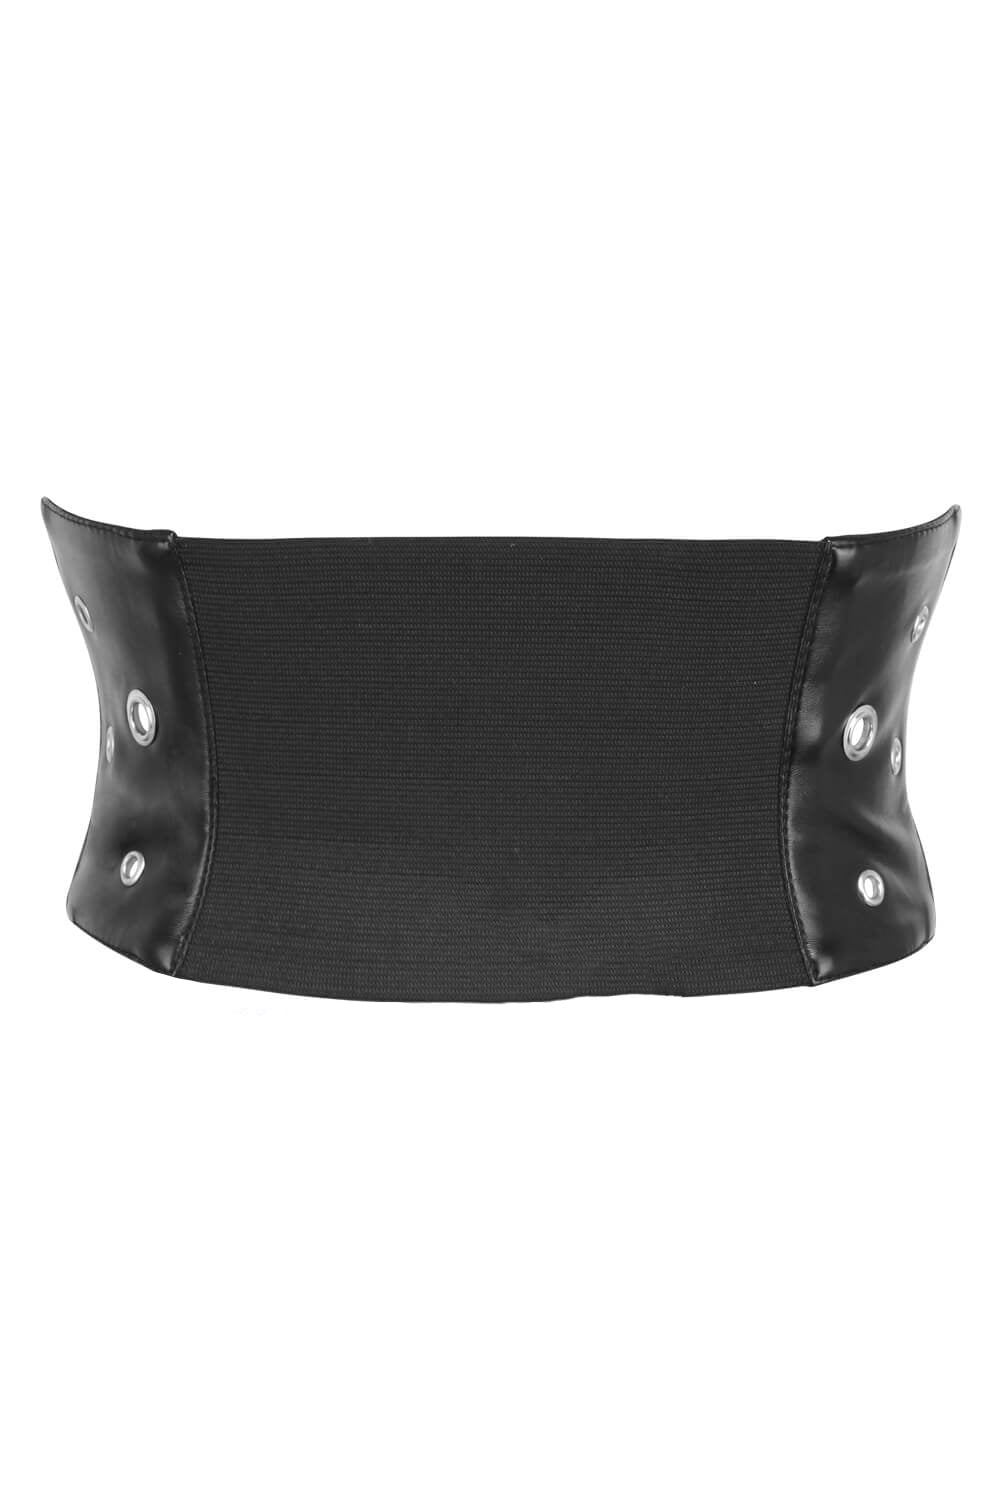 Silver Black Gothic Corset Belt